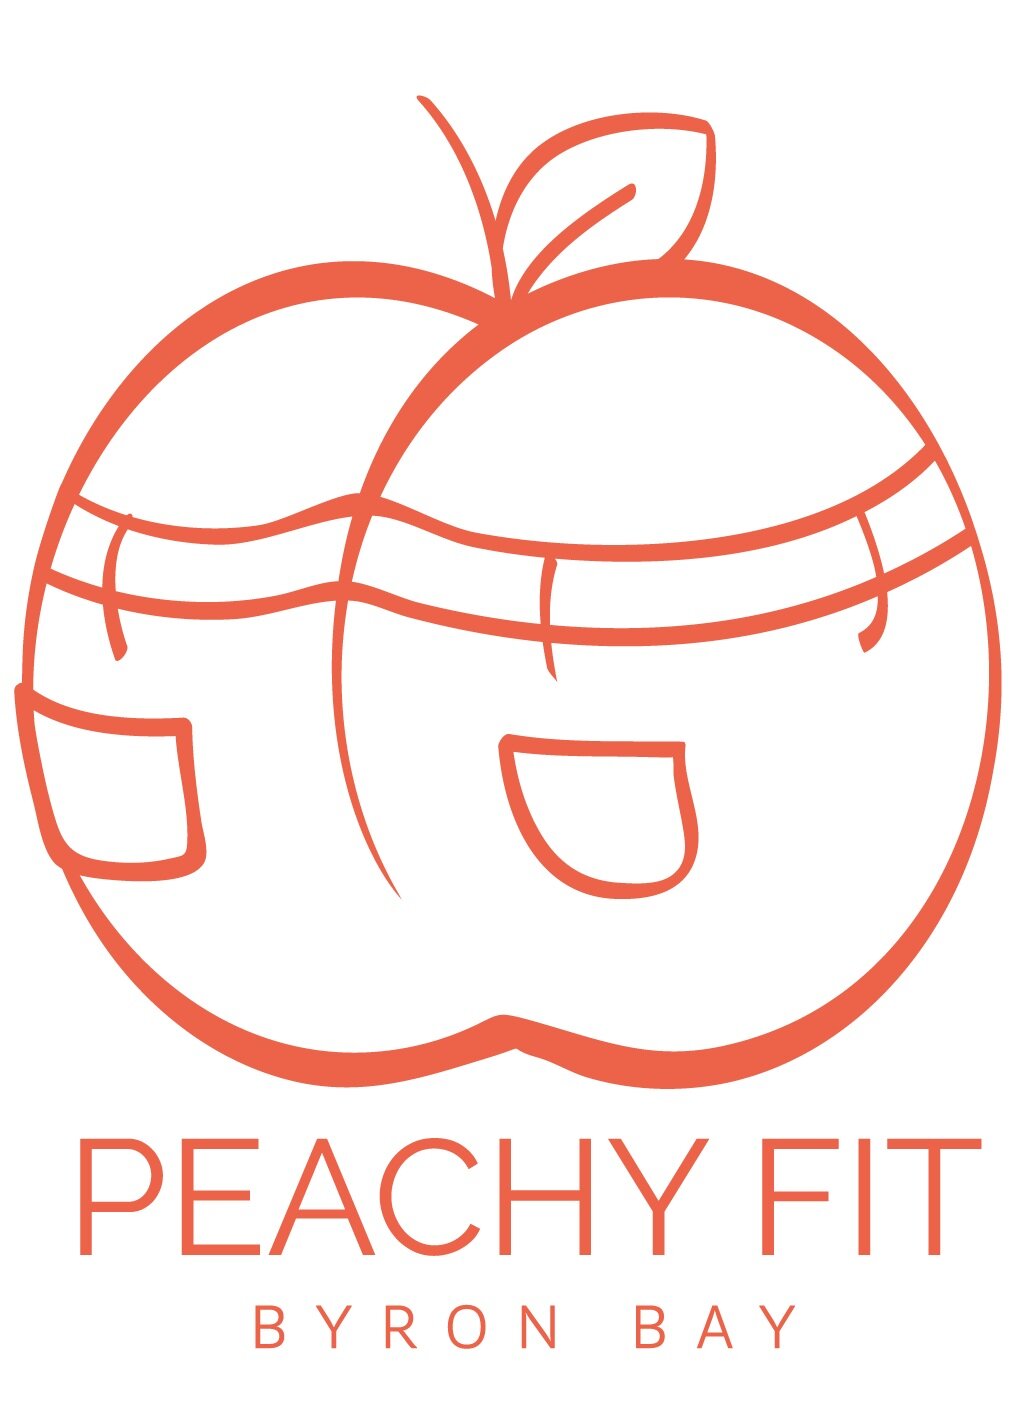 Peachy Fit